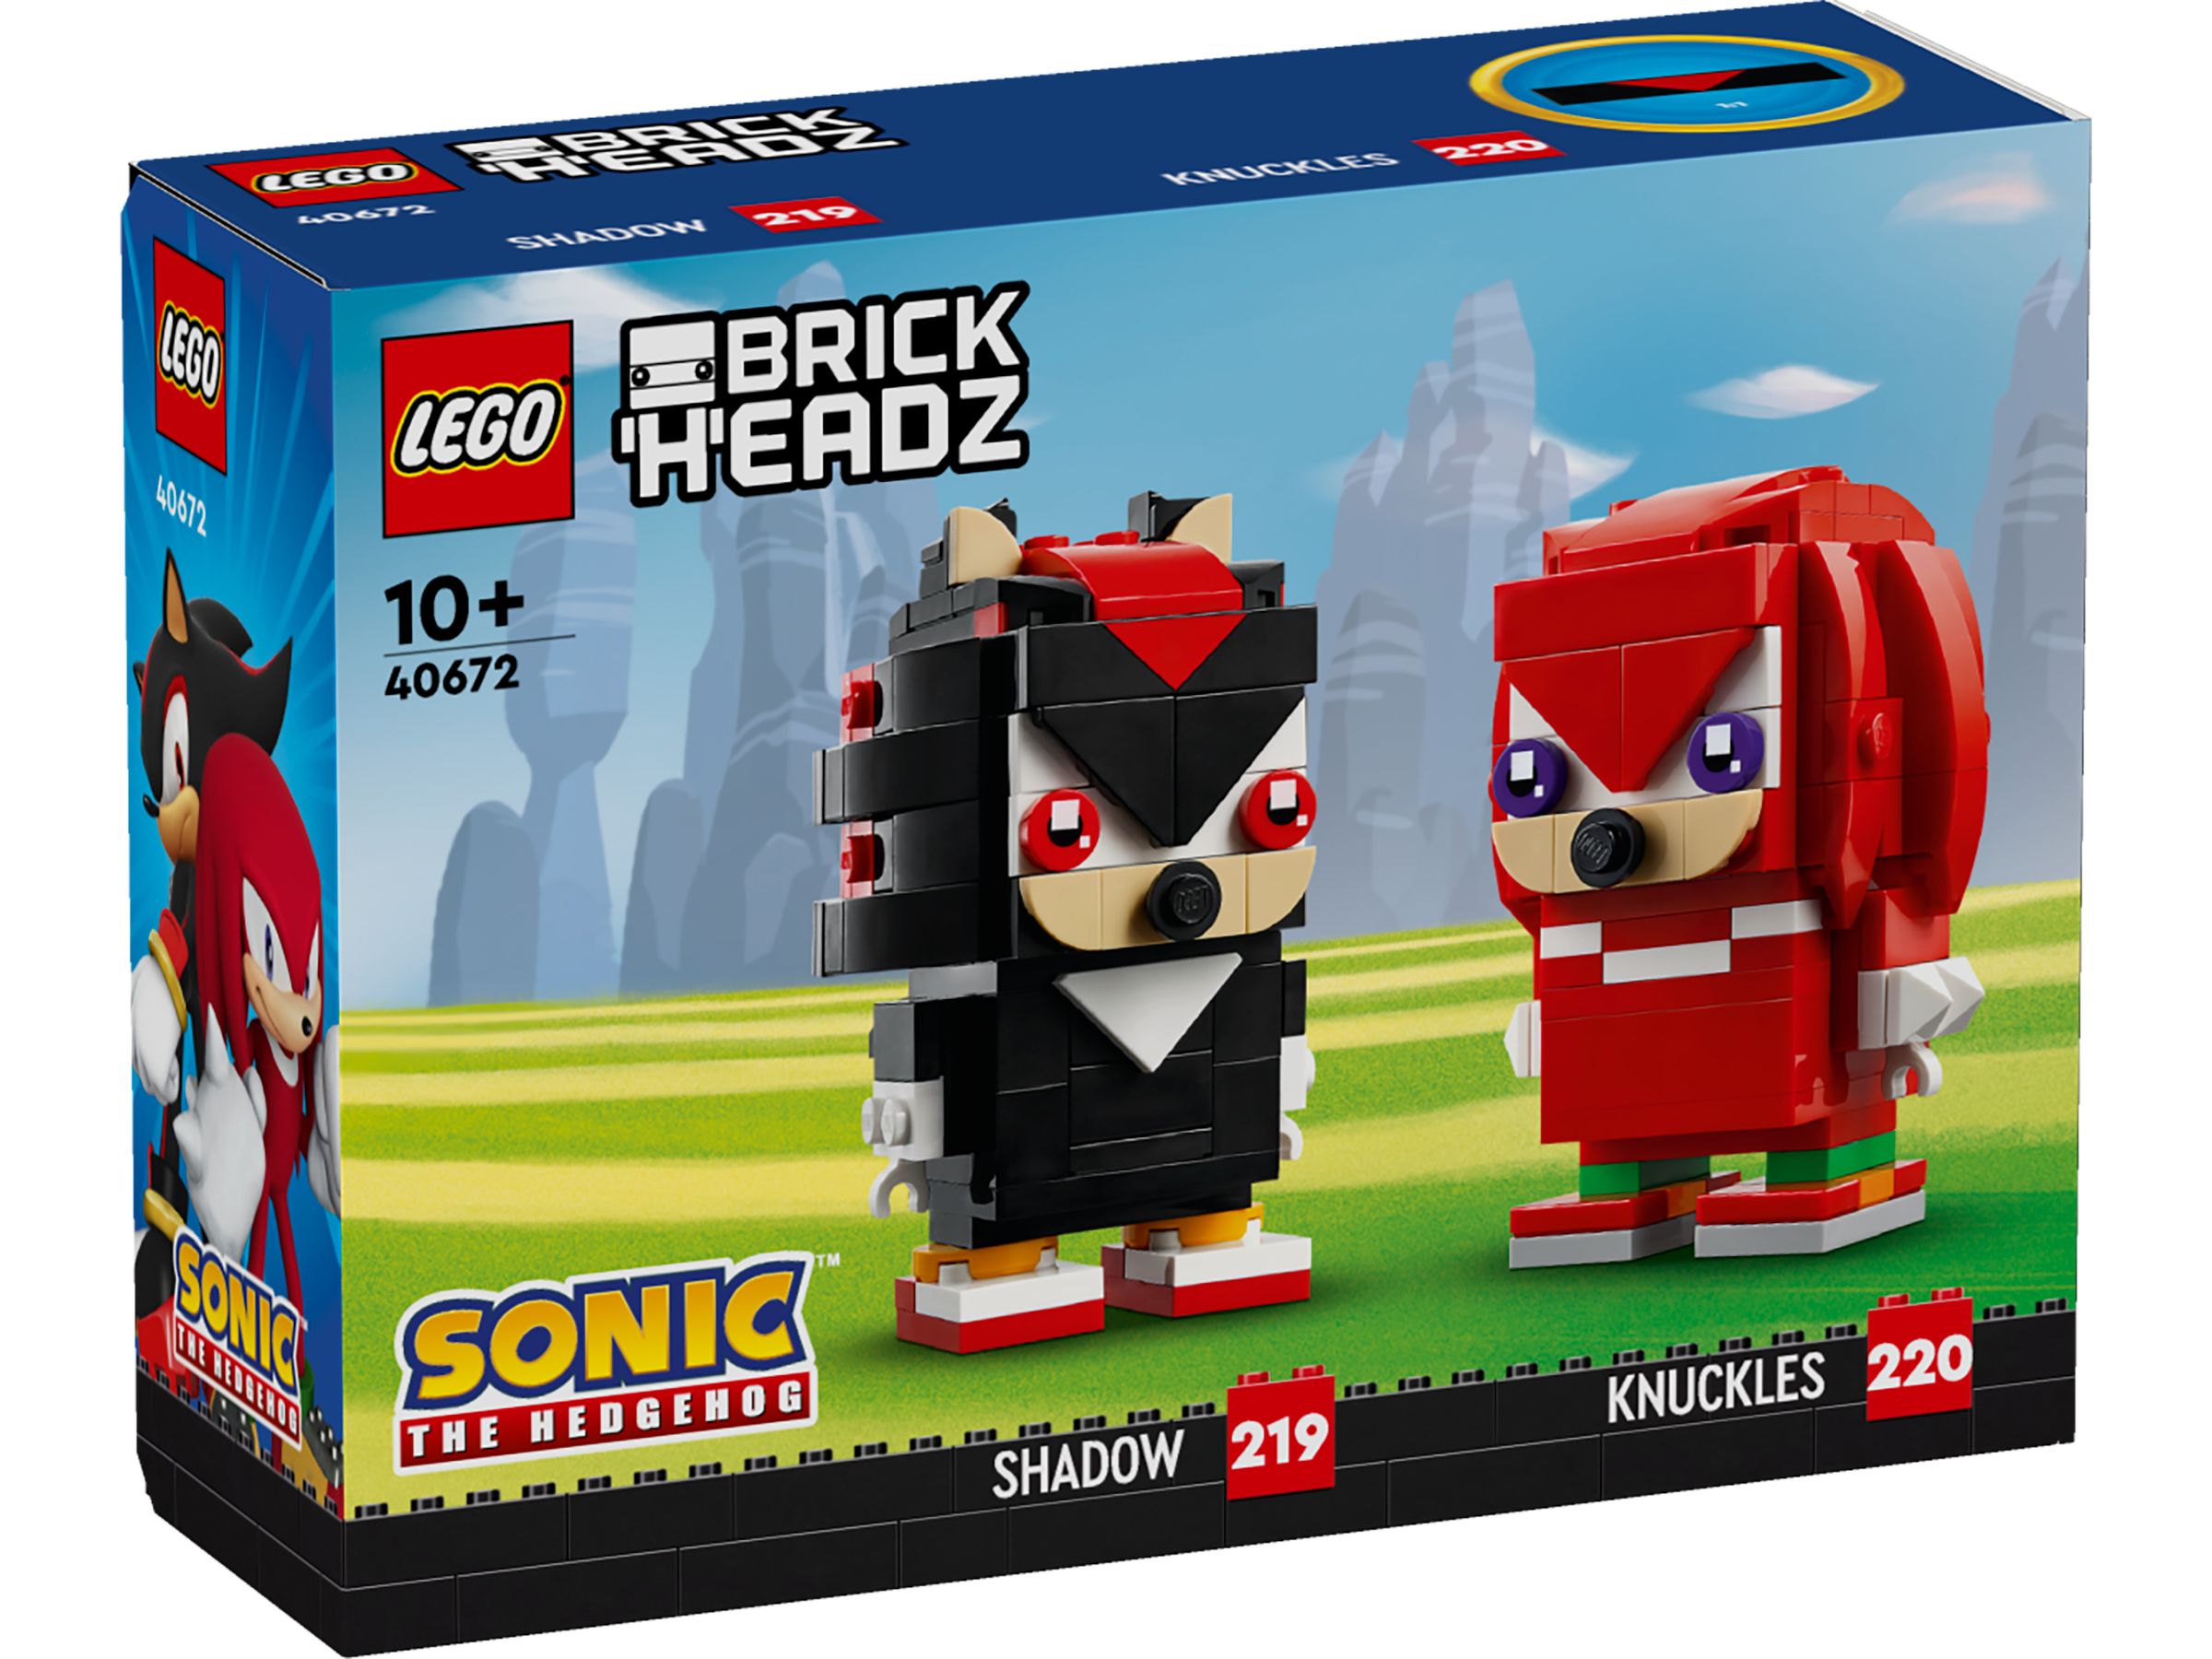 LEGO BrickHeadz 40672 Sonic the Hedgehog™: Knuckles & Shadow LEGO_40672_Box1_v29.jpg